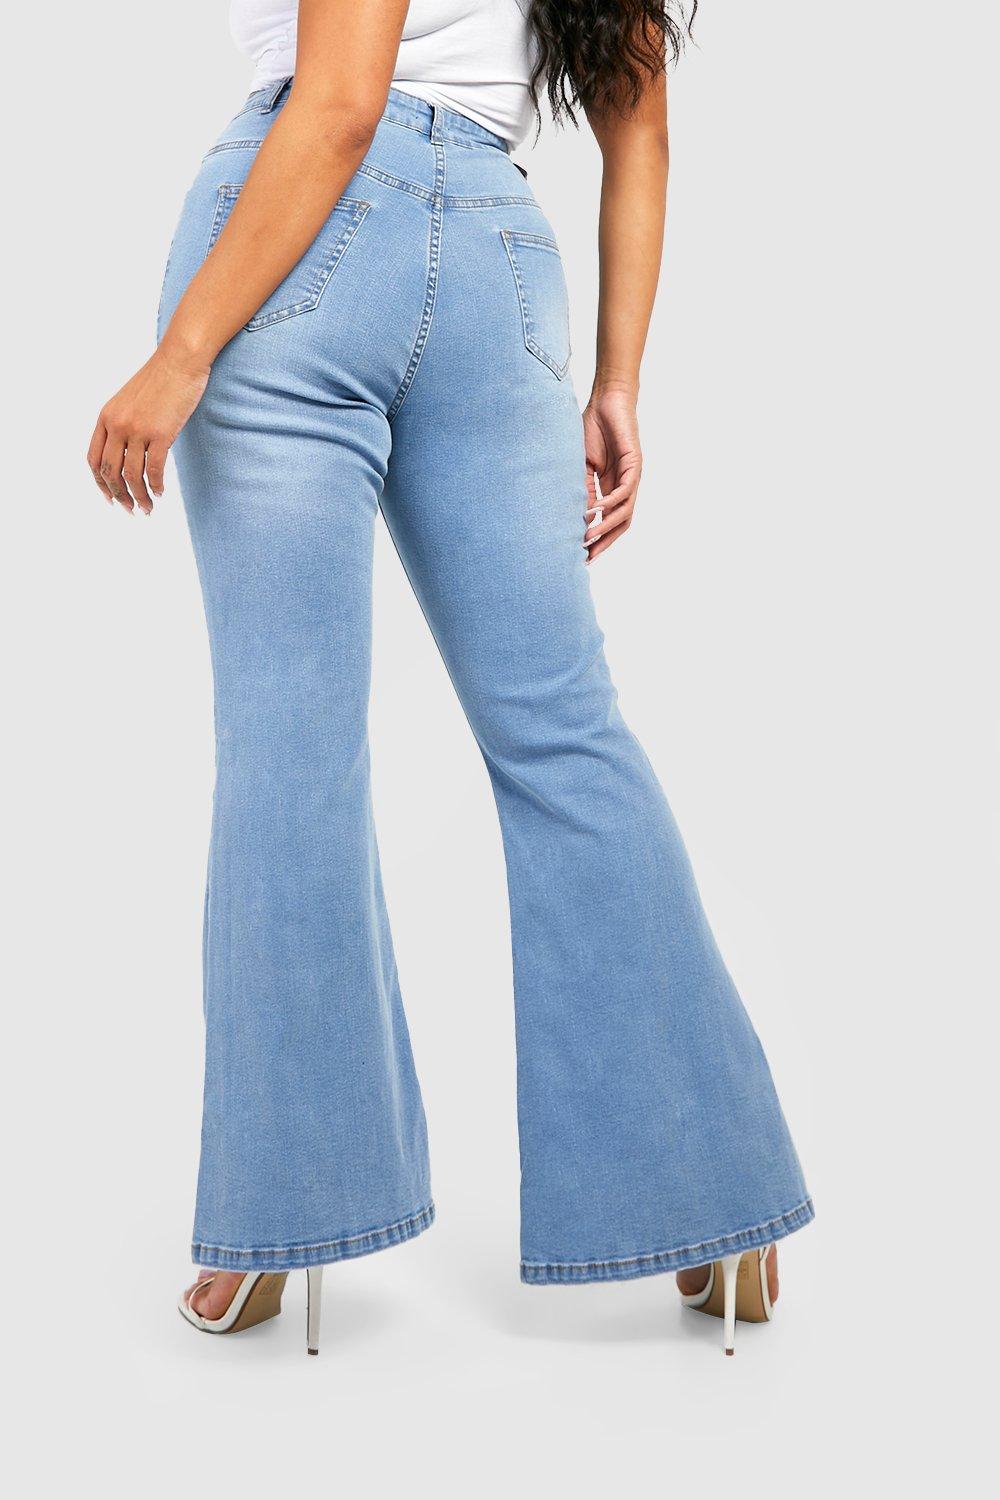 https://media.boohoo.com/i/boohoo/gzz69681_light%20wash_xl_3/female-light%20wash-plus-stretch-denim-flare-jeans